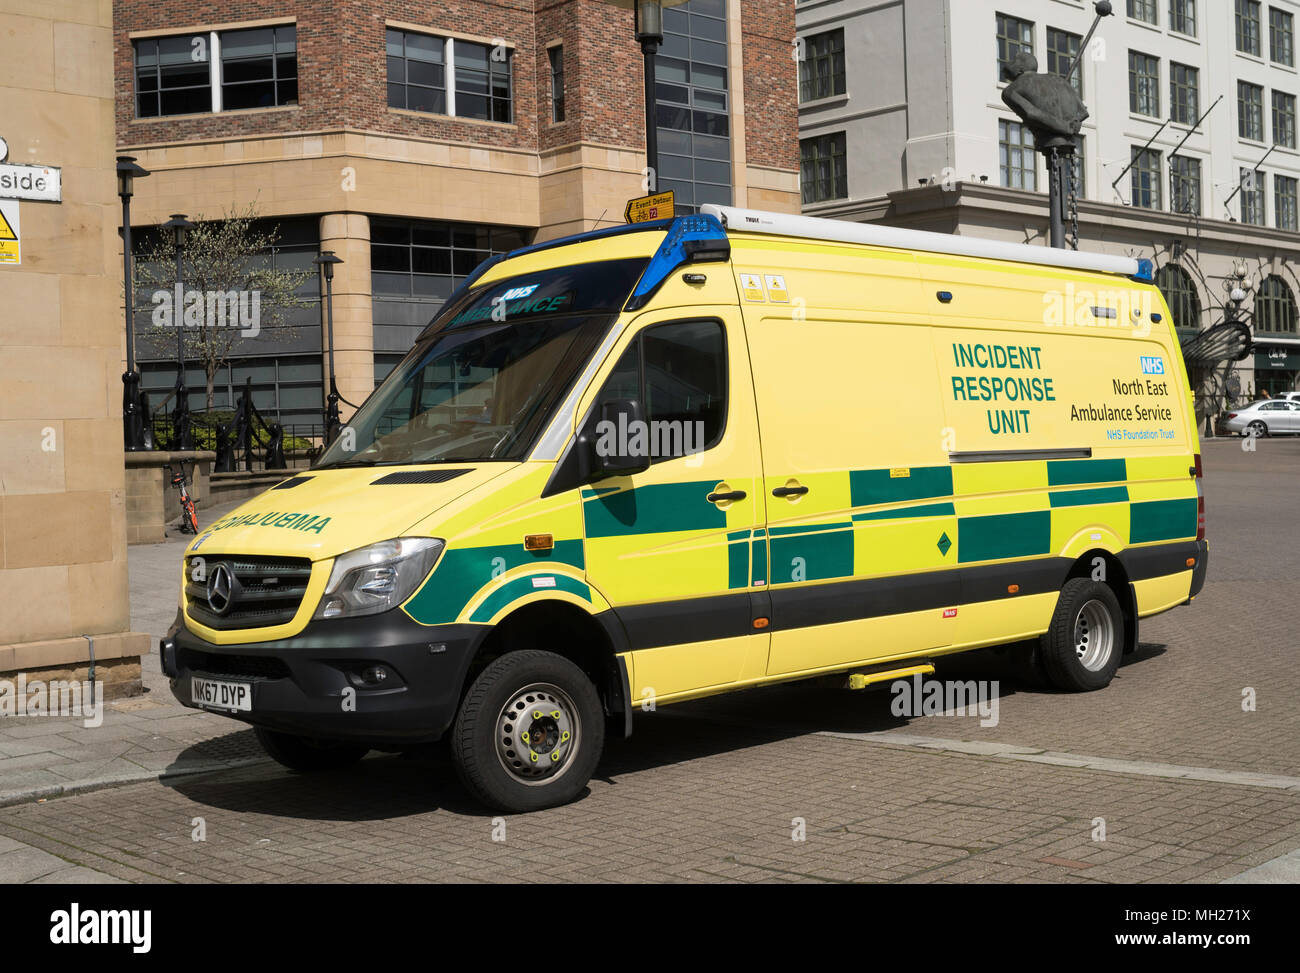 North East Ambulance service Incident Response Unit, Newcastle, north east England, UK Stock Photo